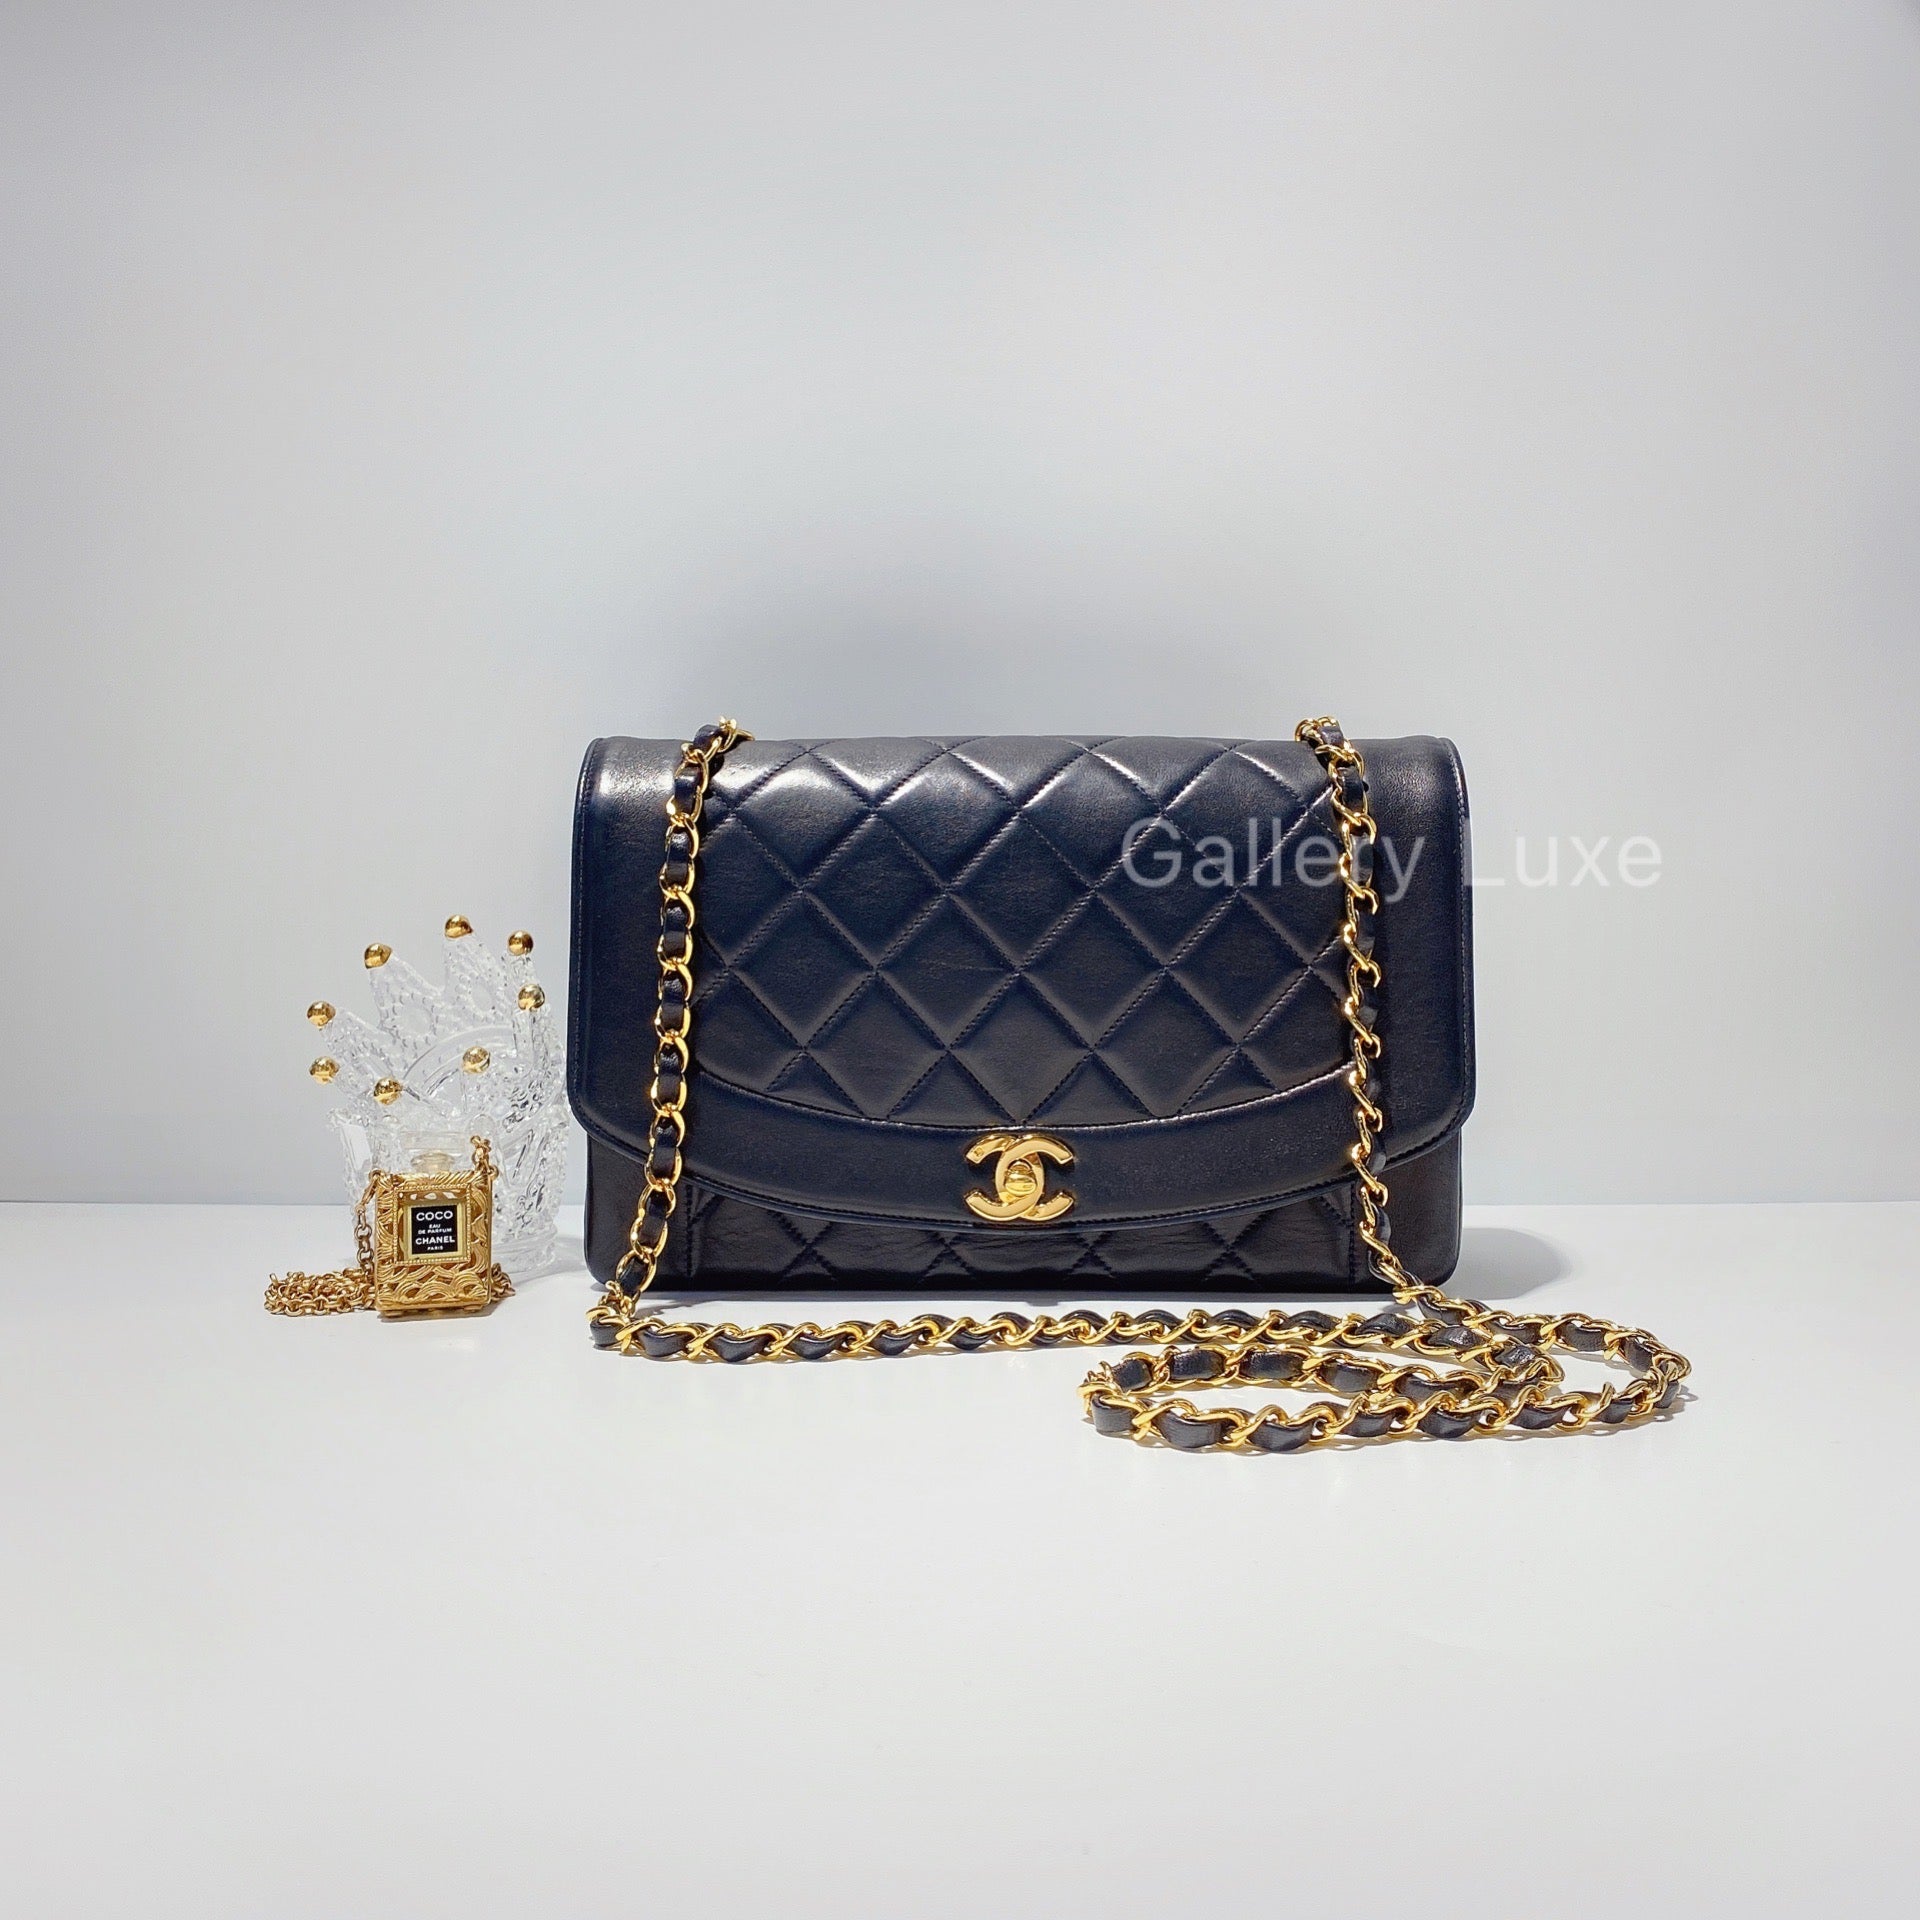 The Chanel Diana Bag: A Vintage Design Fit For Royals